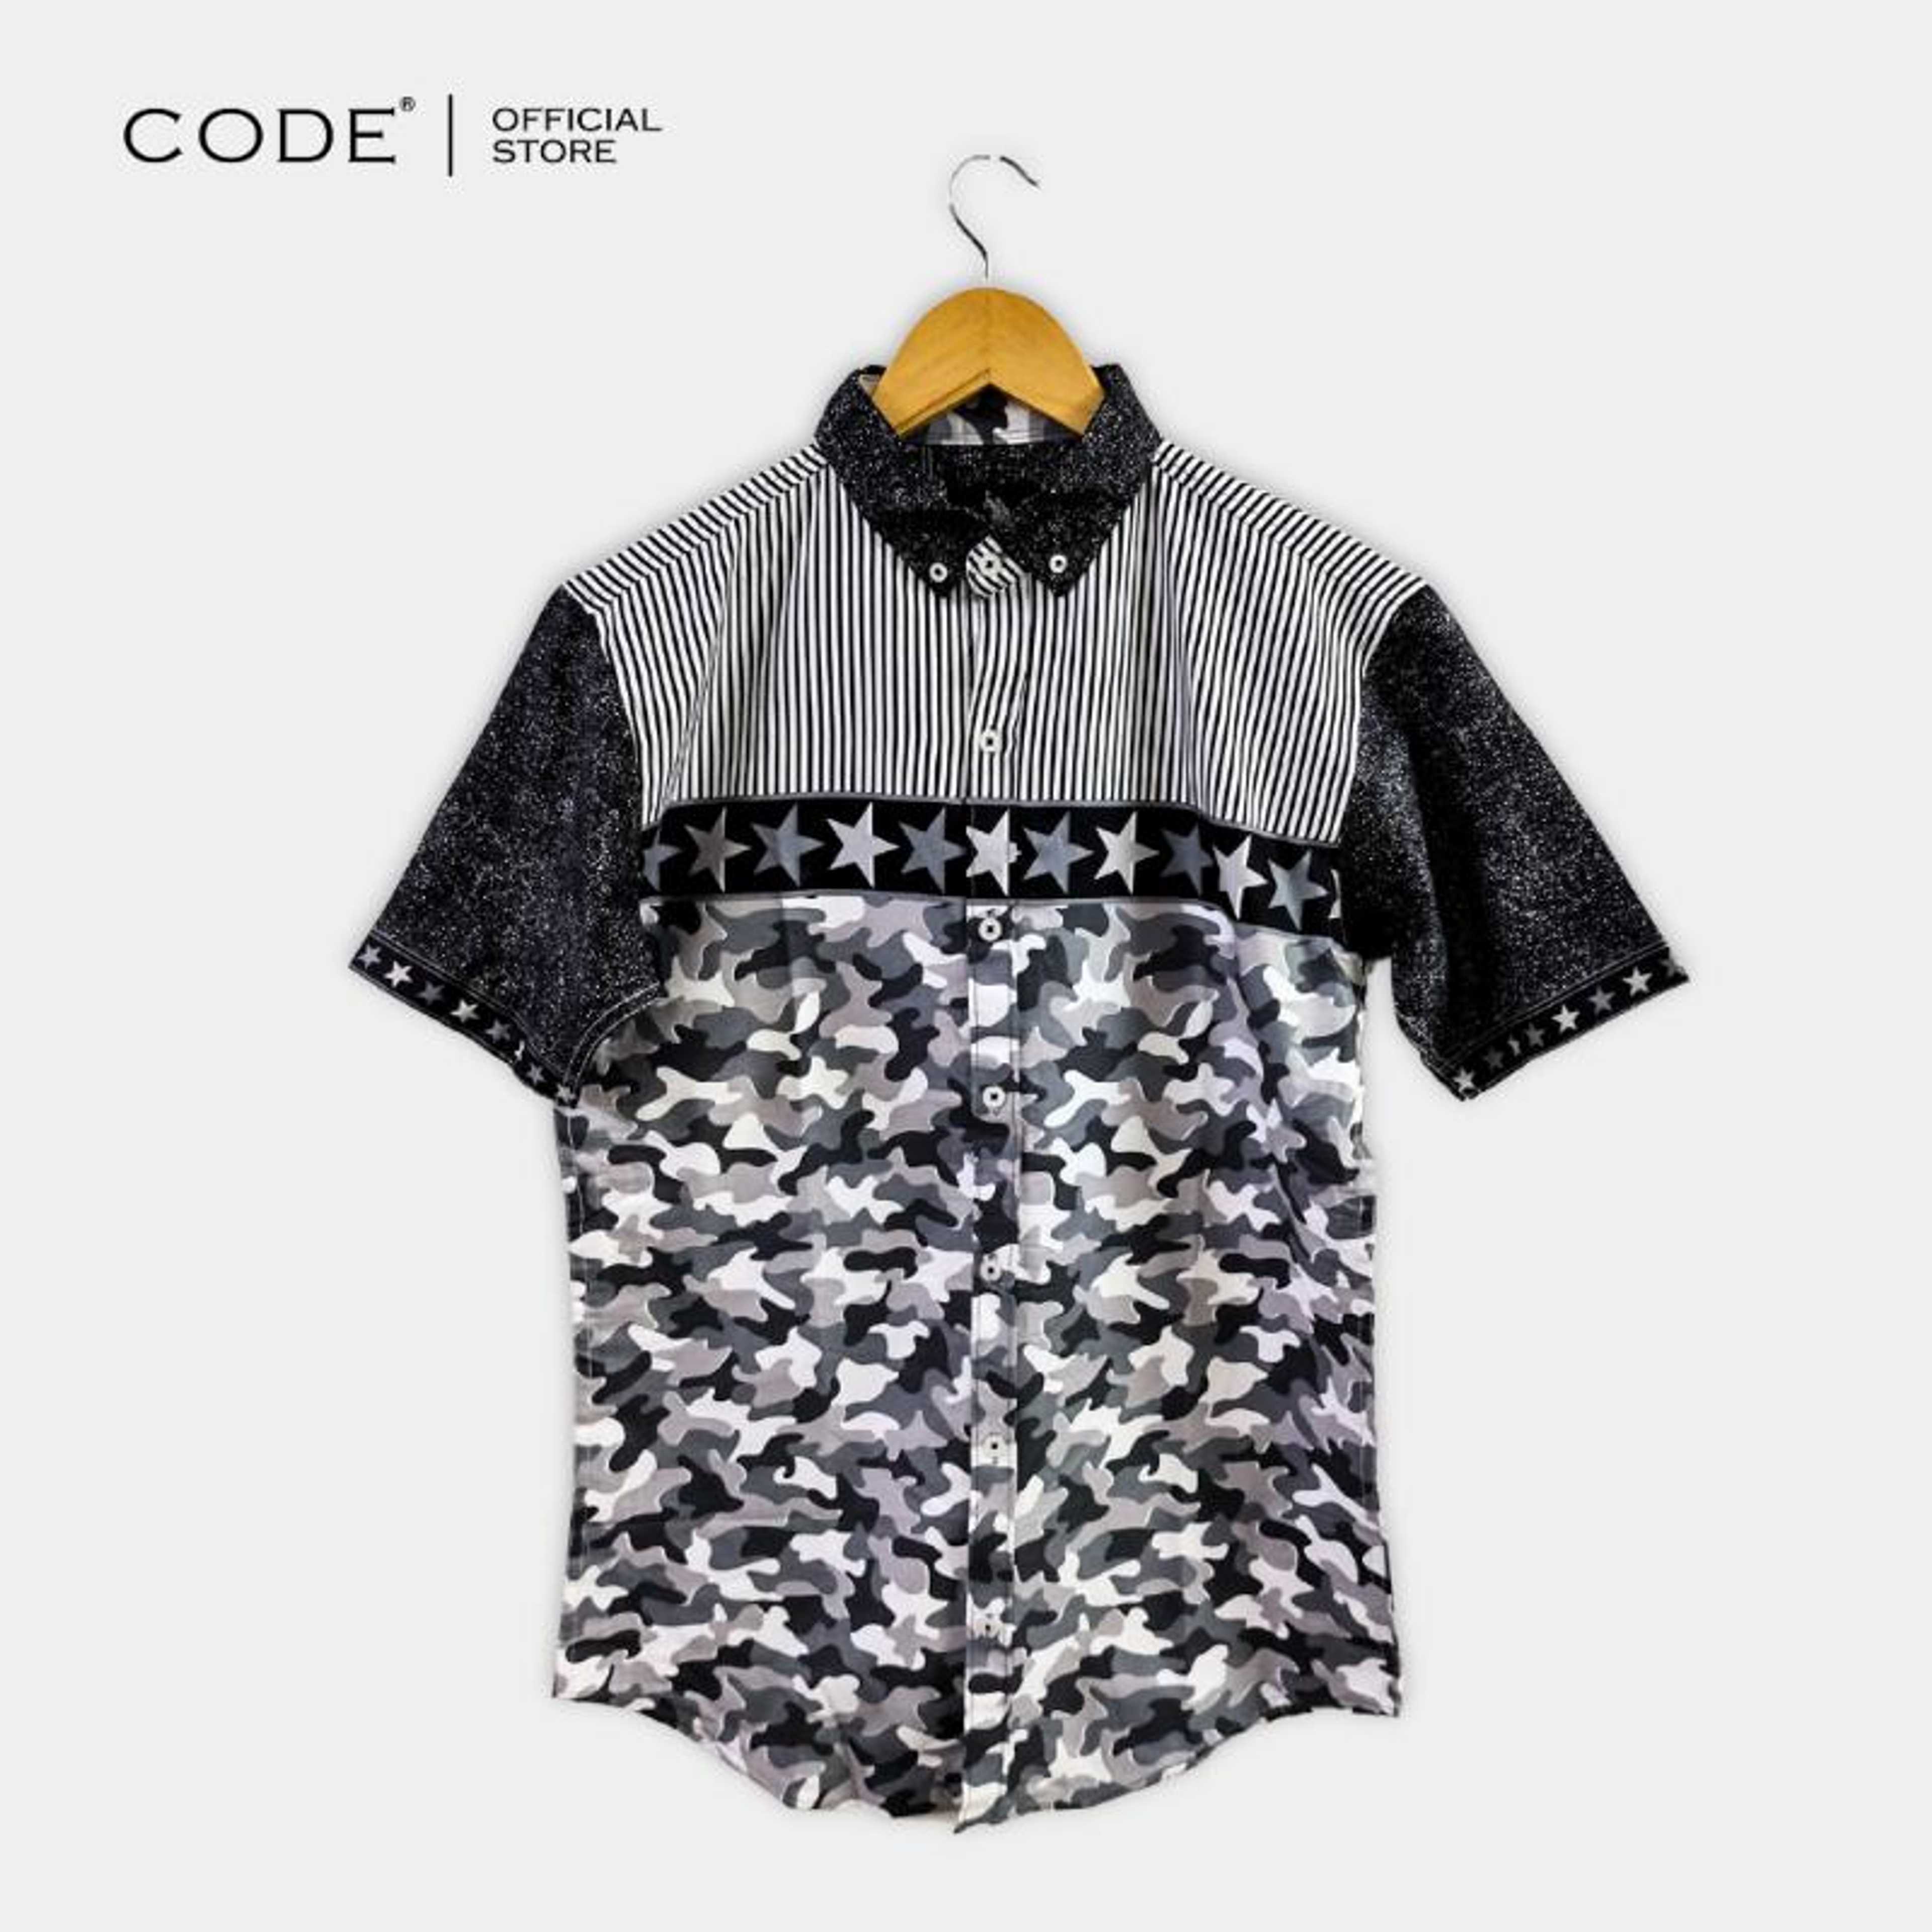 Code Shirts For Men | Shirts For Boys | Half Sleeves Shirts For Men | Casual Shirts For Men | Mens Shirts | Printed Shirts For Men | Shirts | Fashion | Premium Quality Shirts For Boys